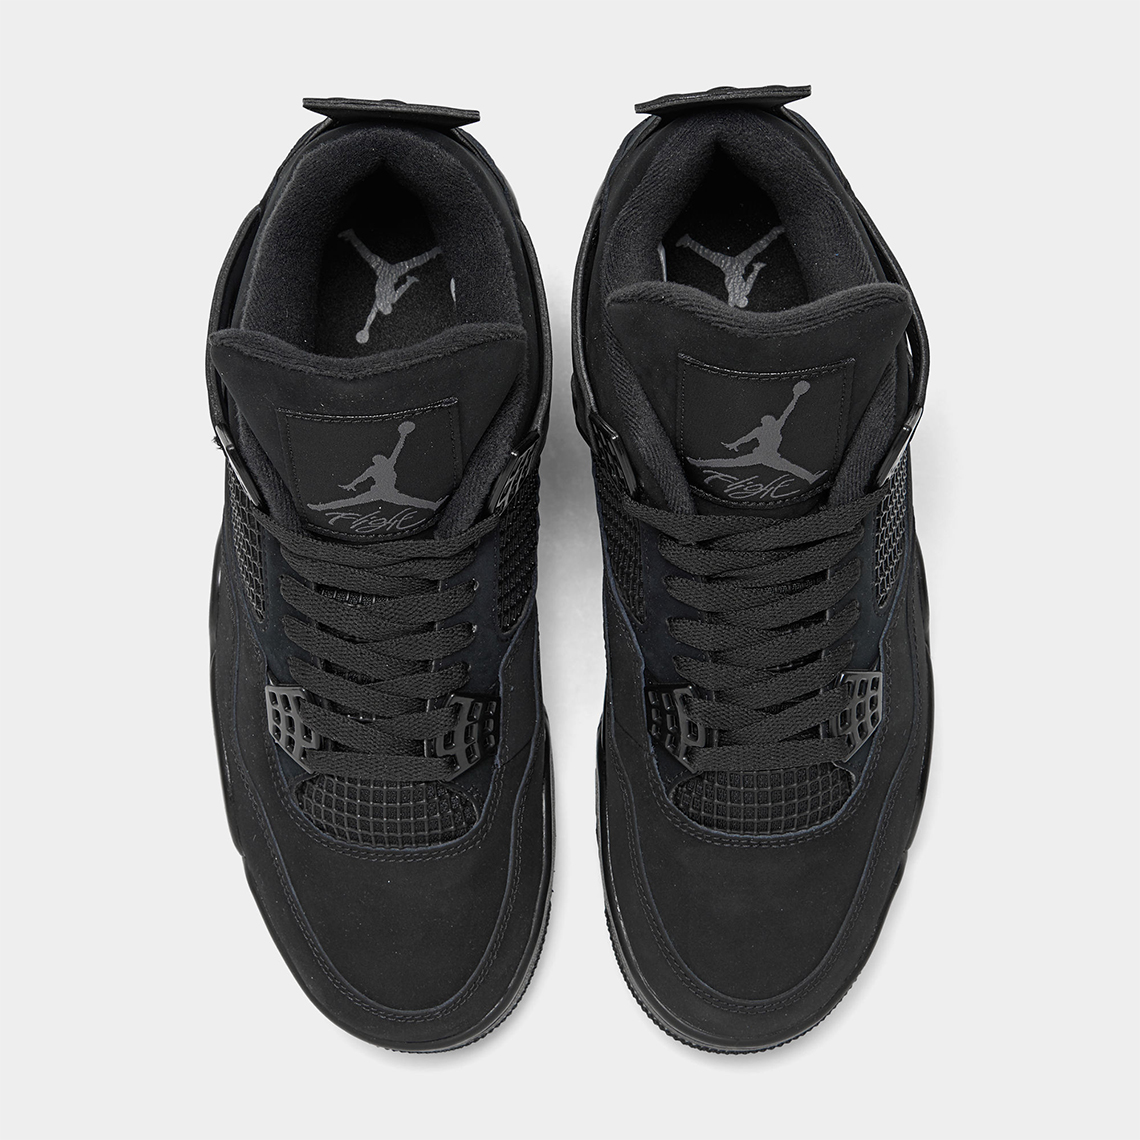 Nike air jordan low black white mint кросівки Retro Black Cat 2020 Cu1110 010 3